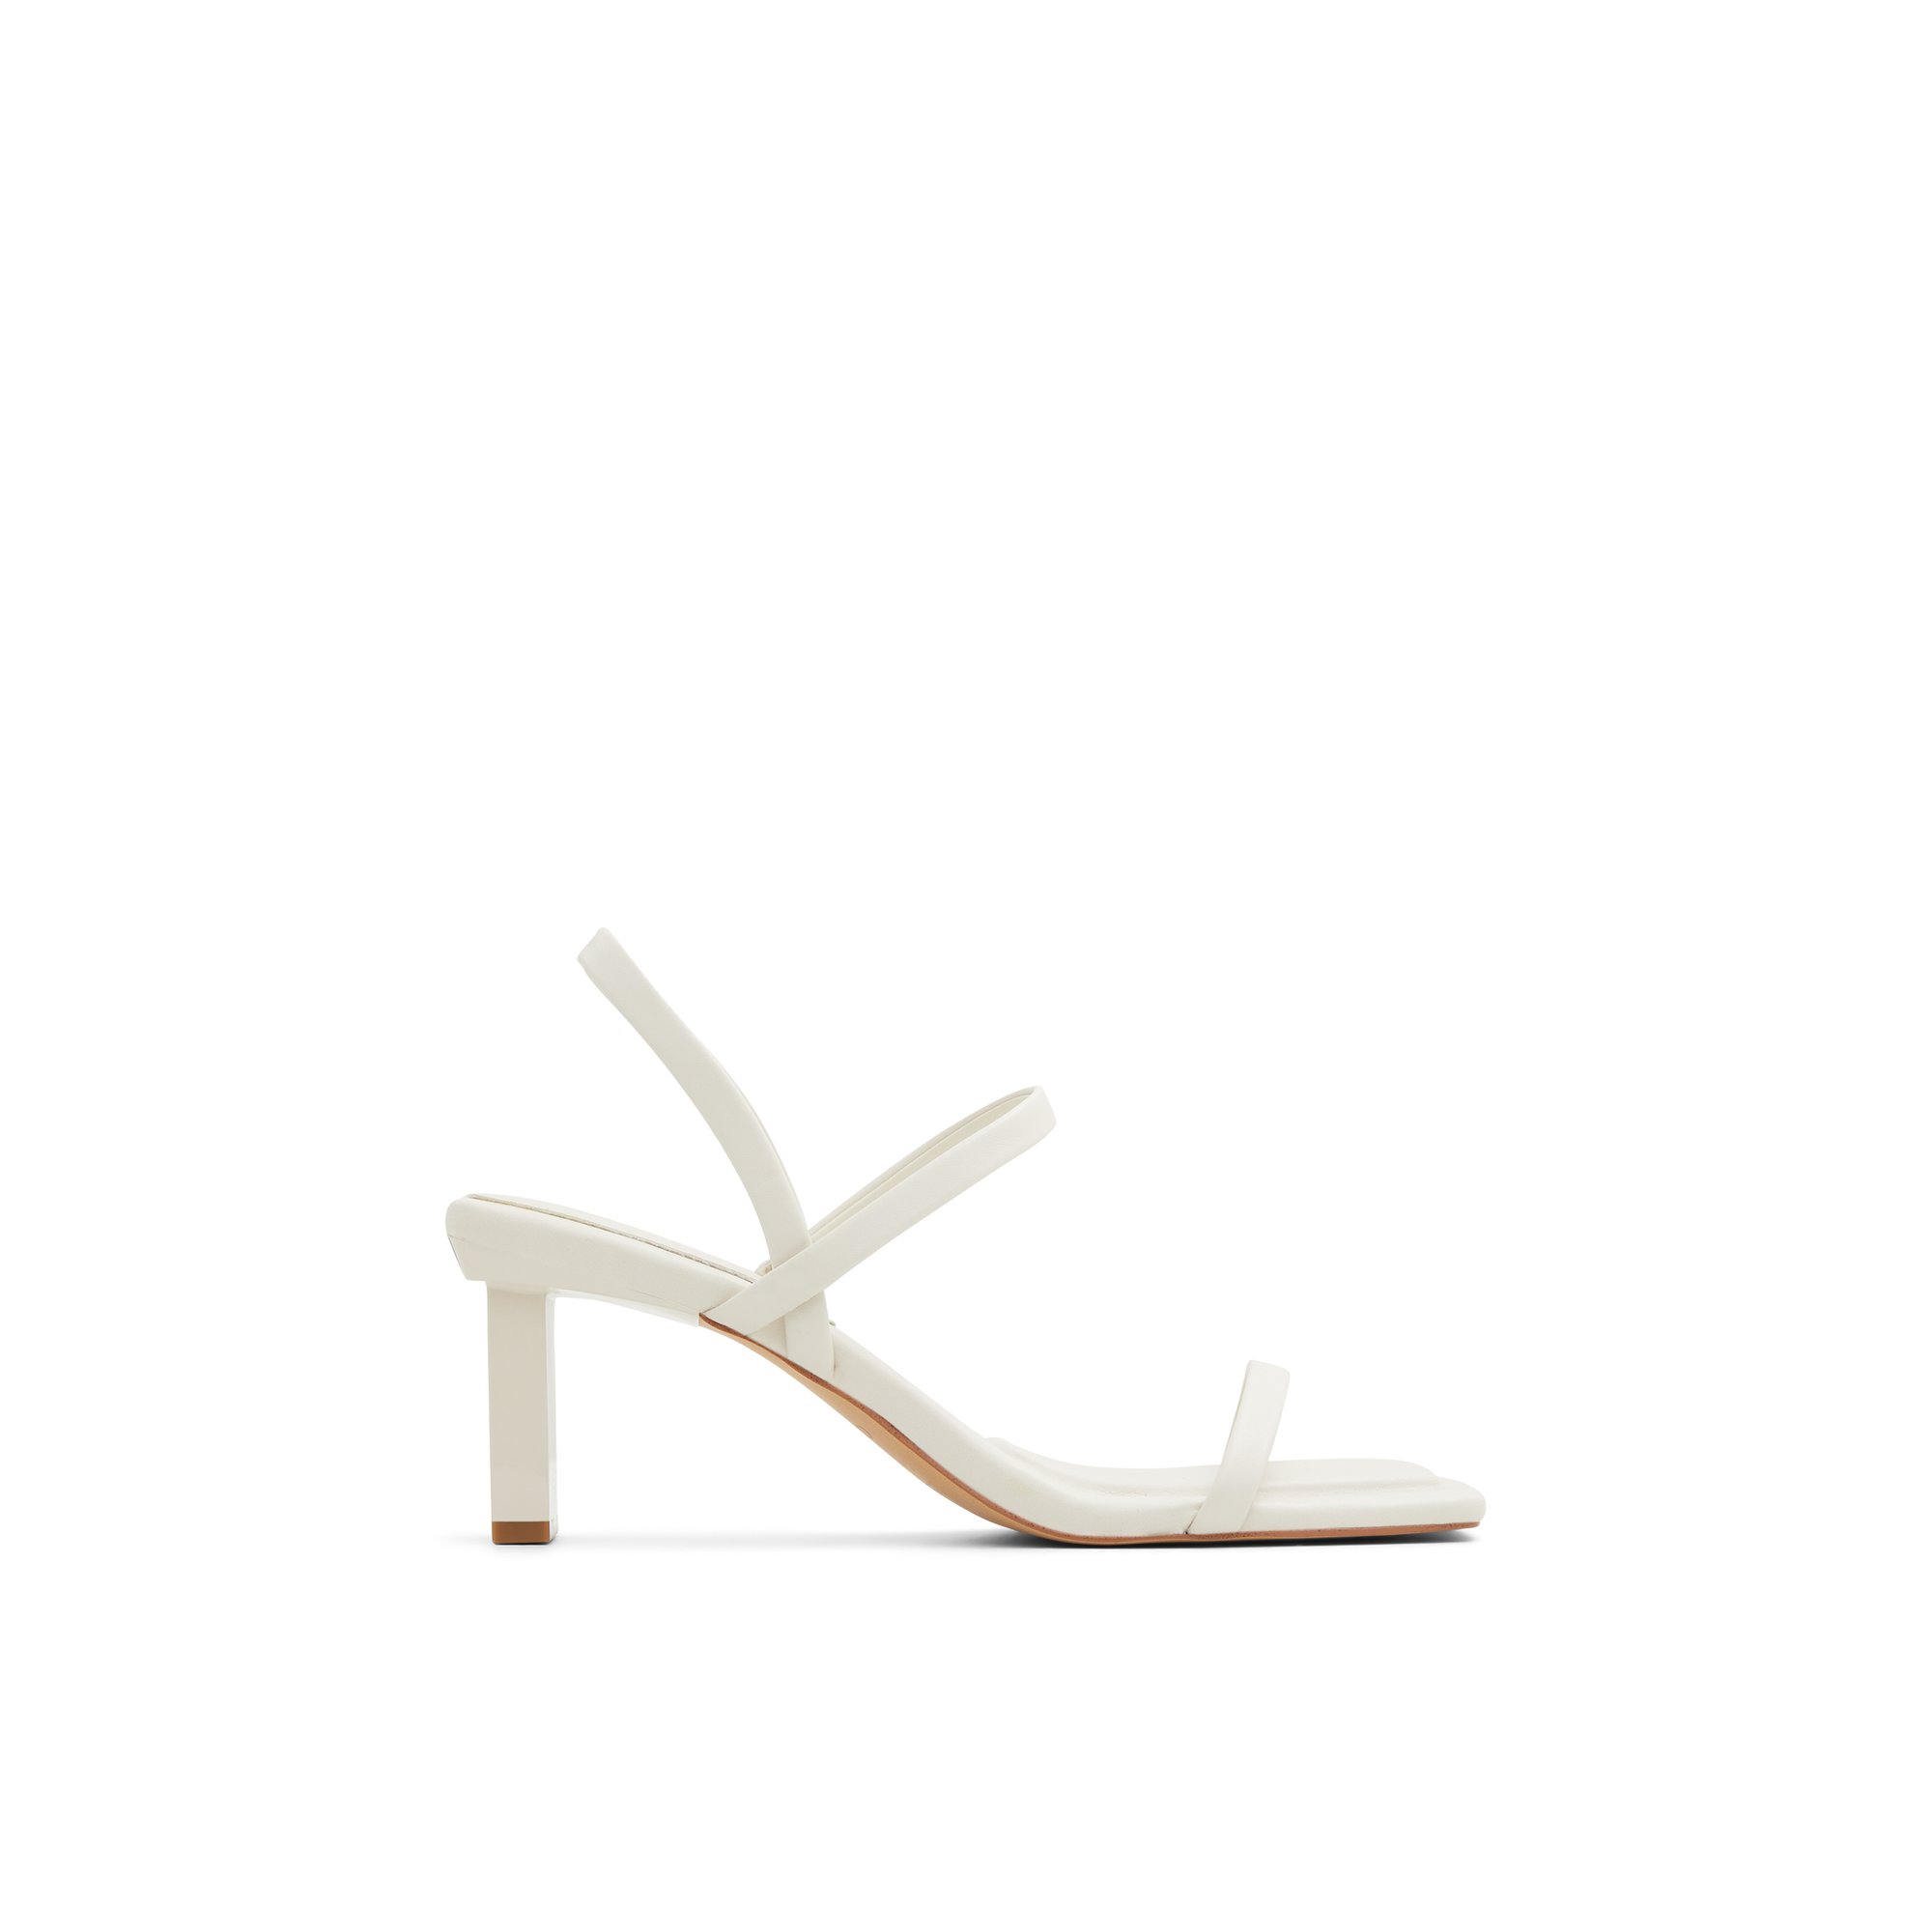 ALDO Lokurr - Women's Strappy Sandal Sandals - White